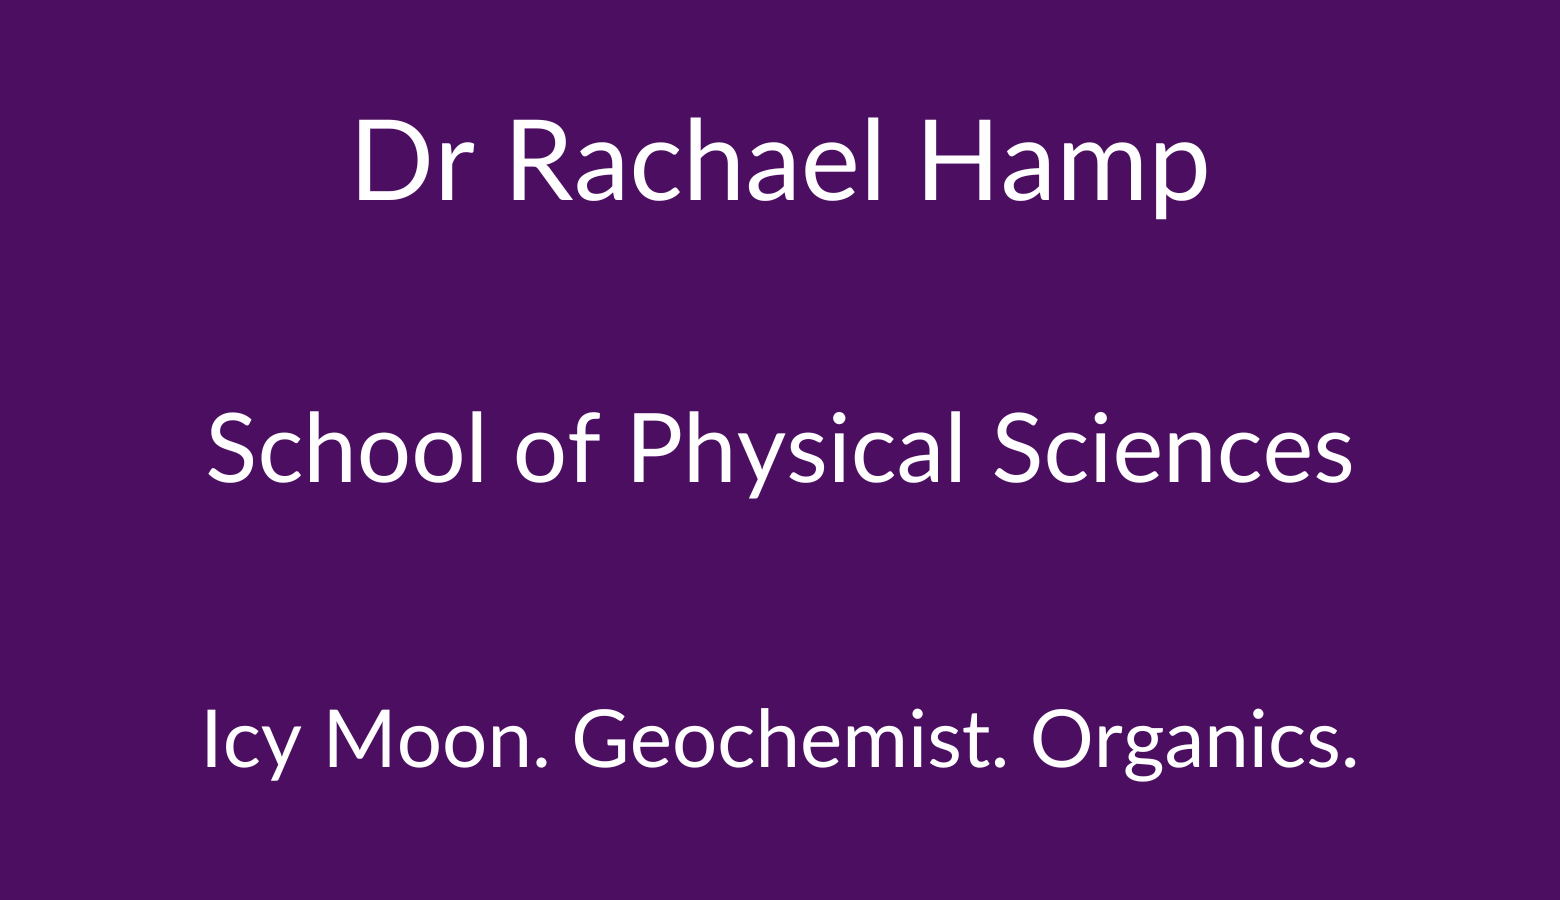 Dr Rachael Hamp. School of Physical Sciences. Icy Moons. Geochemist. Organics